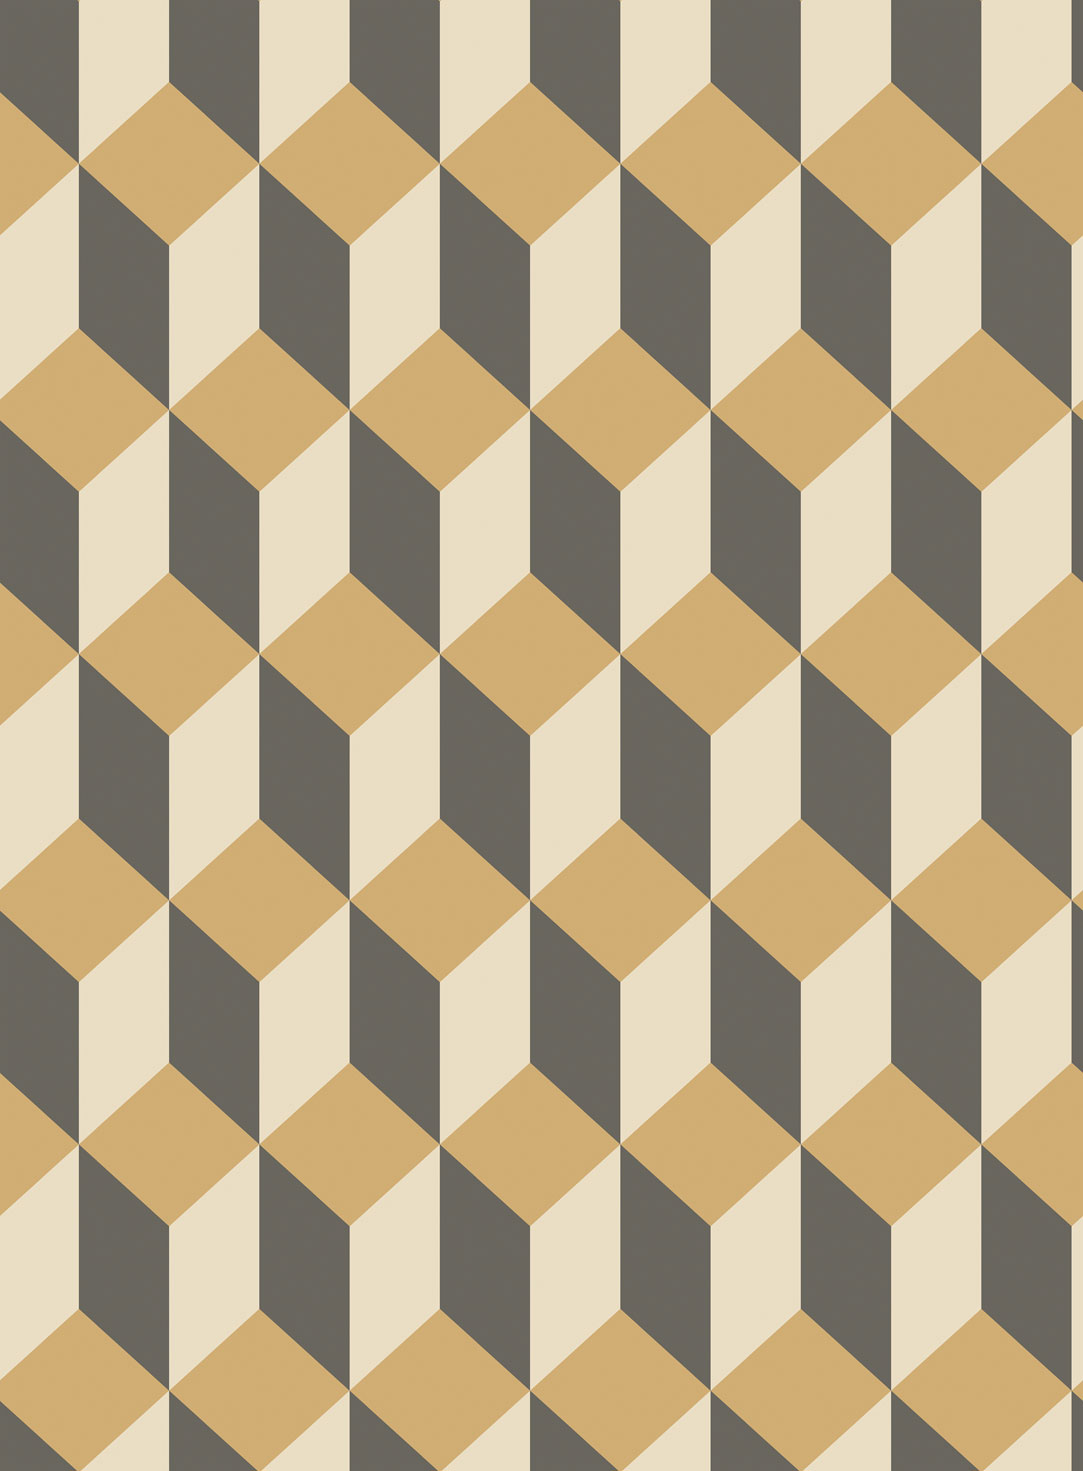 Wallpaper - Cole and Son - Geometric II - Delano-Gold and Black - Straight match -